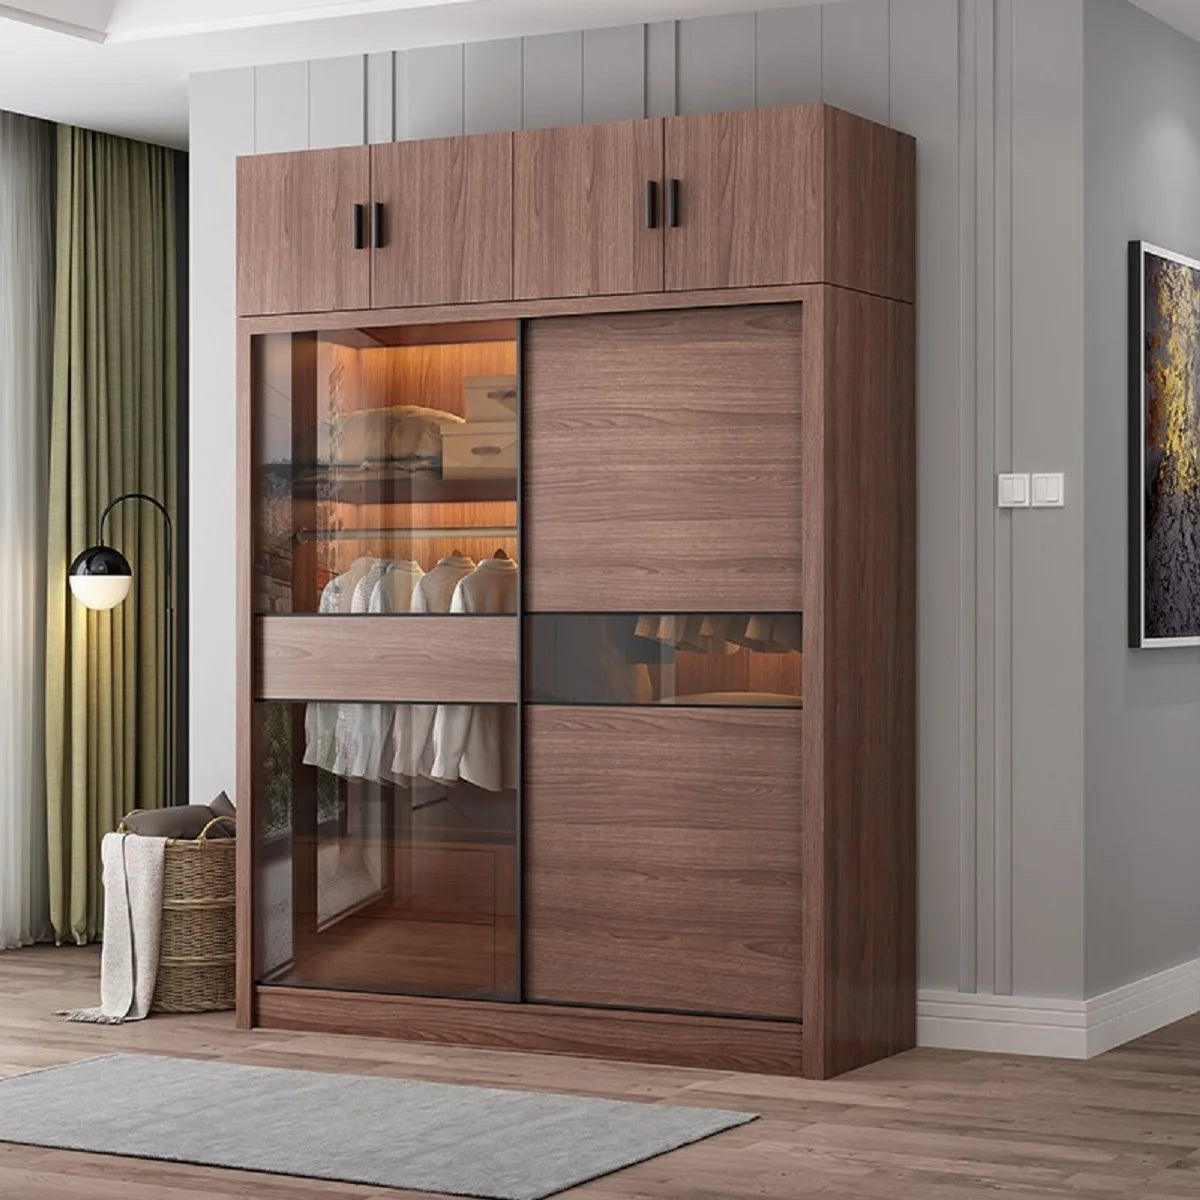 Closet sliding door modern simple economy household bedroom sliding door storage cabinet storage assembly wardrobe